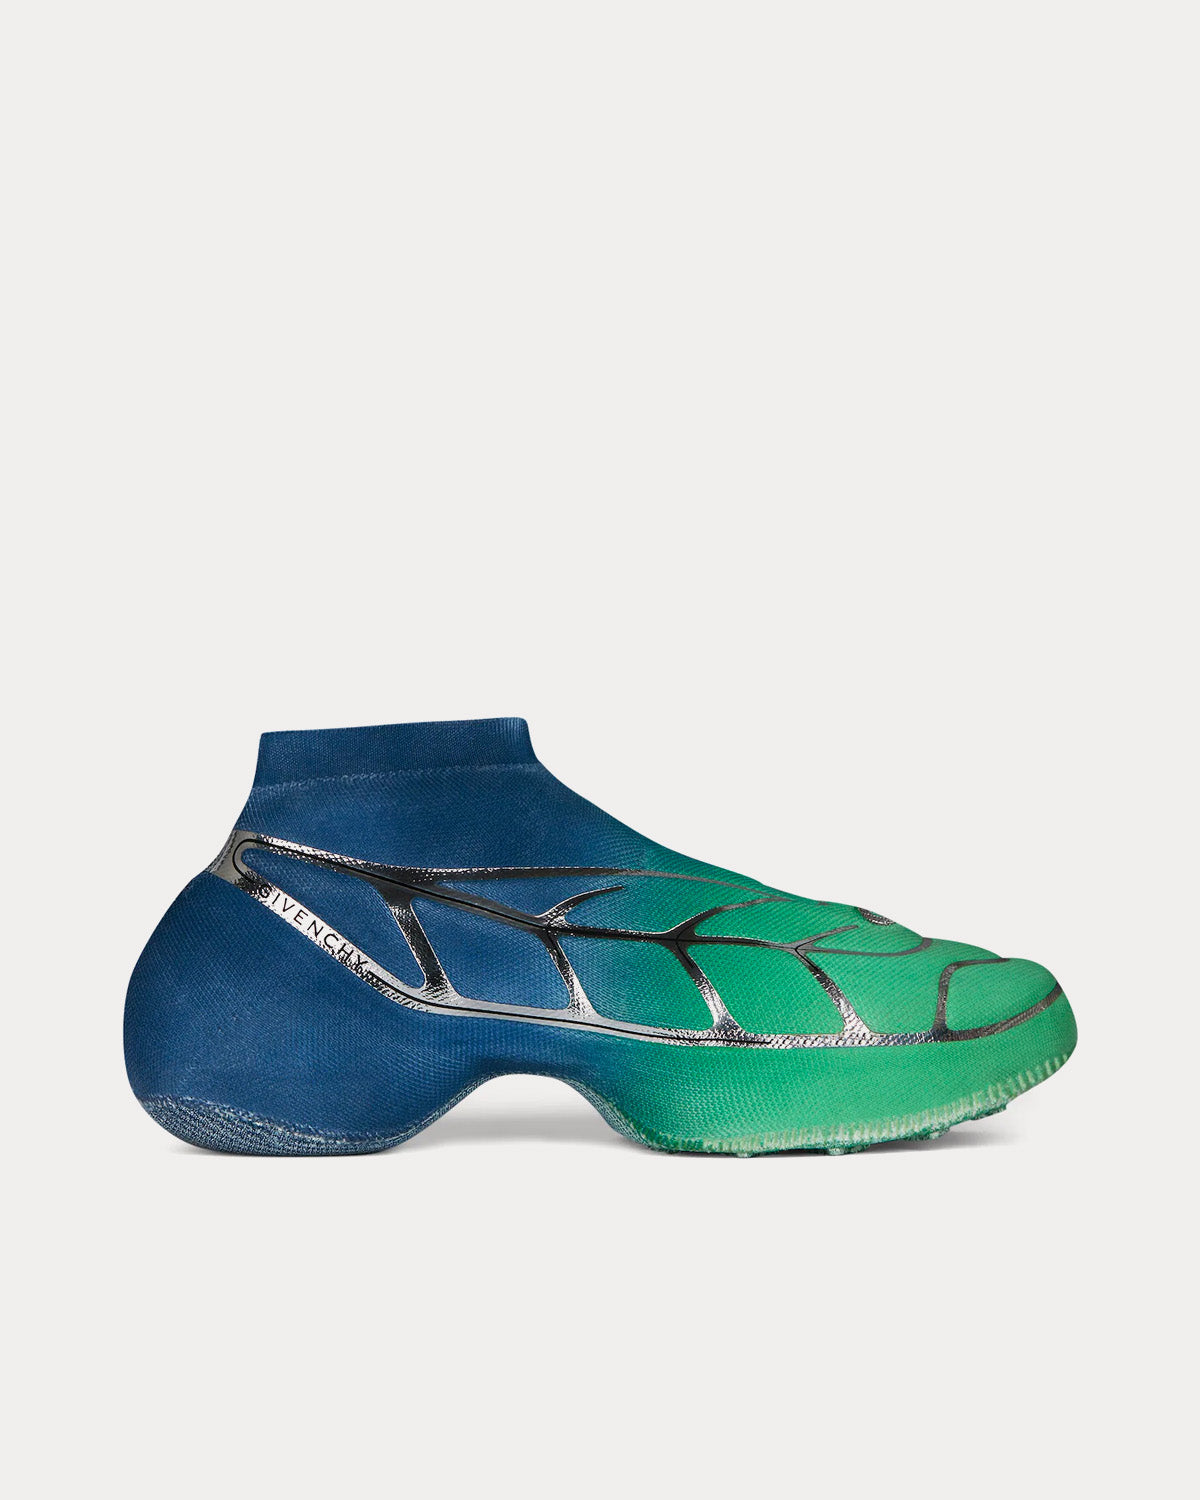 TK-360+ Mid Mesh Blue / Green Slip On Sneakers